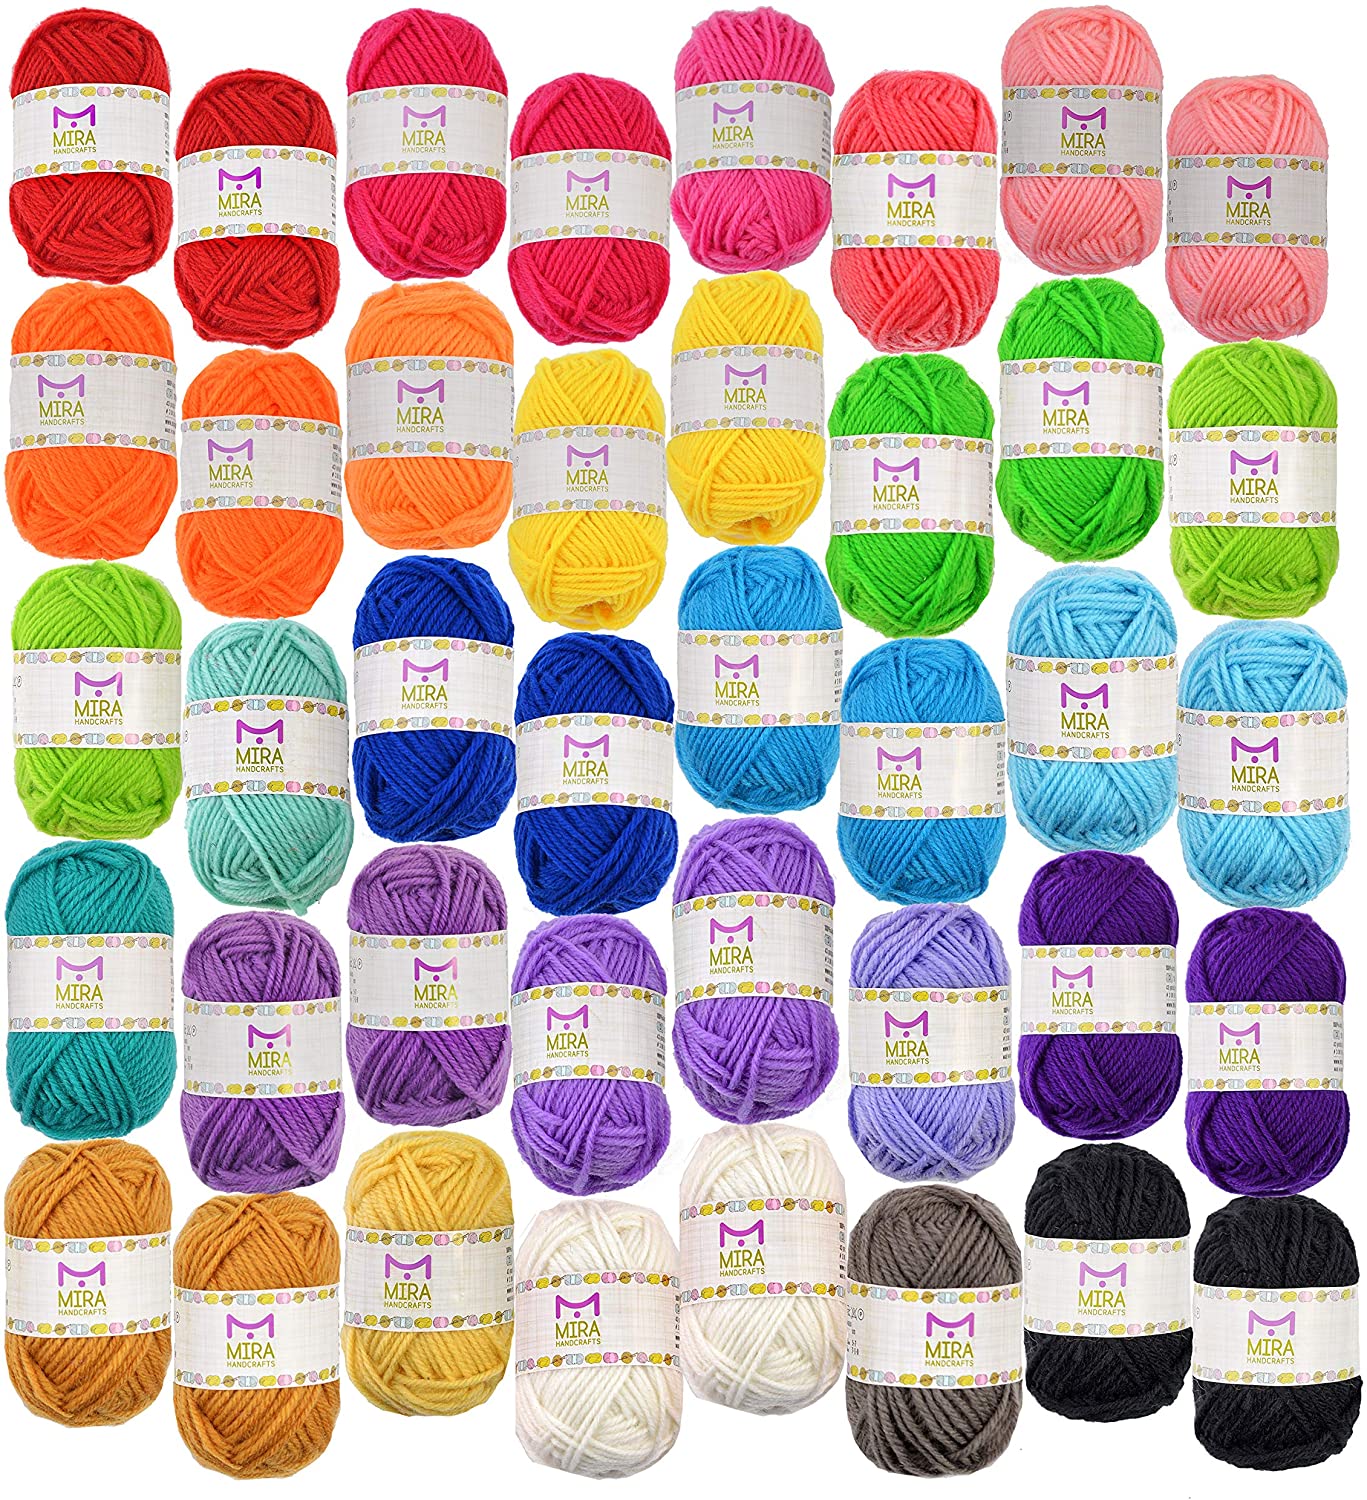 Colorful Crochet Yarn Bundle - 4 Balls